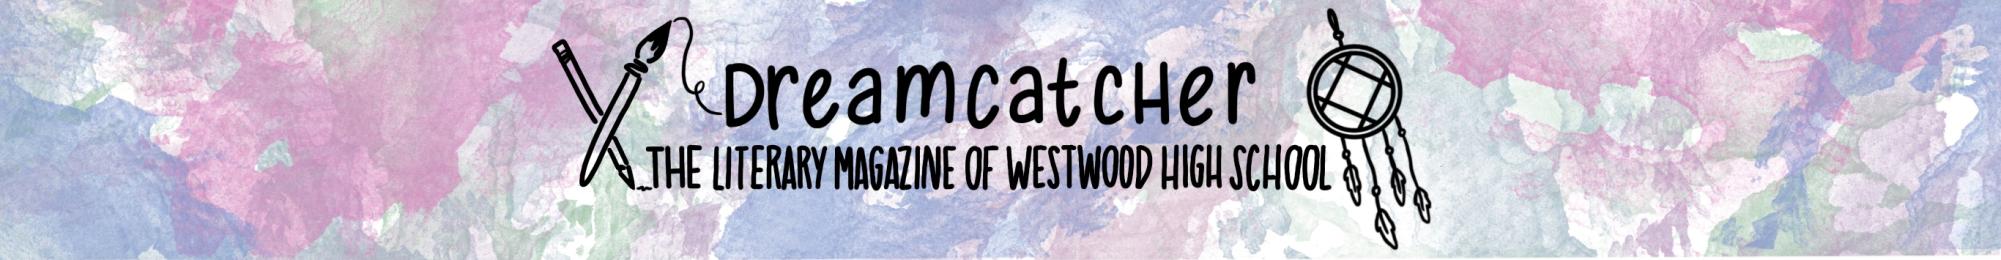 The Literary Magazine of Westwood High School